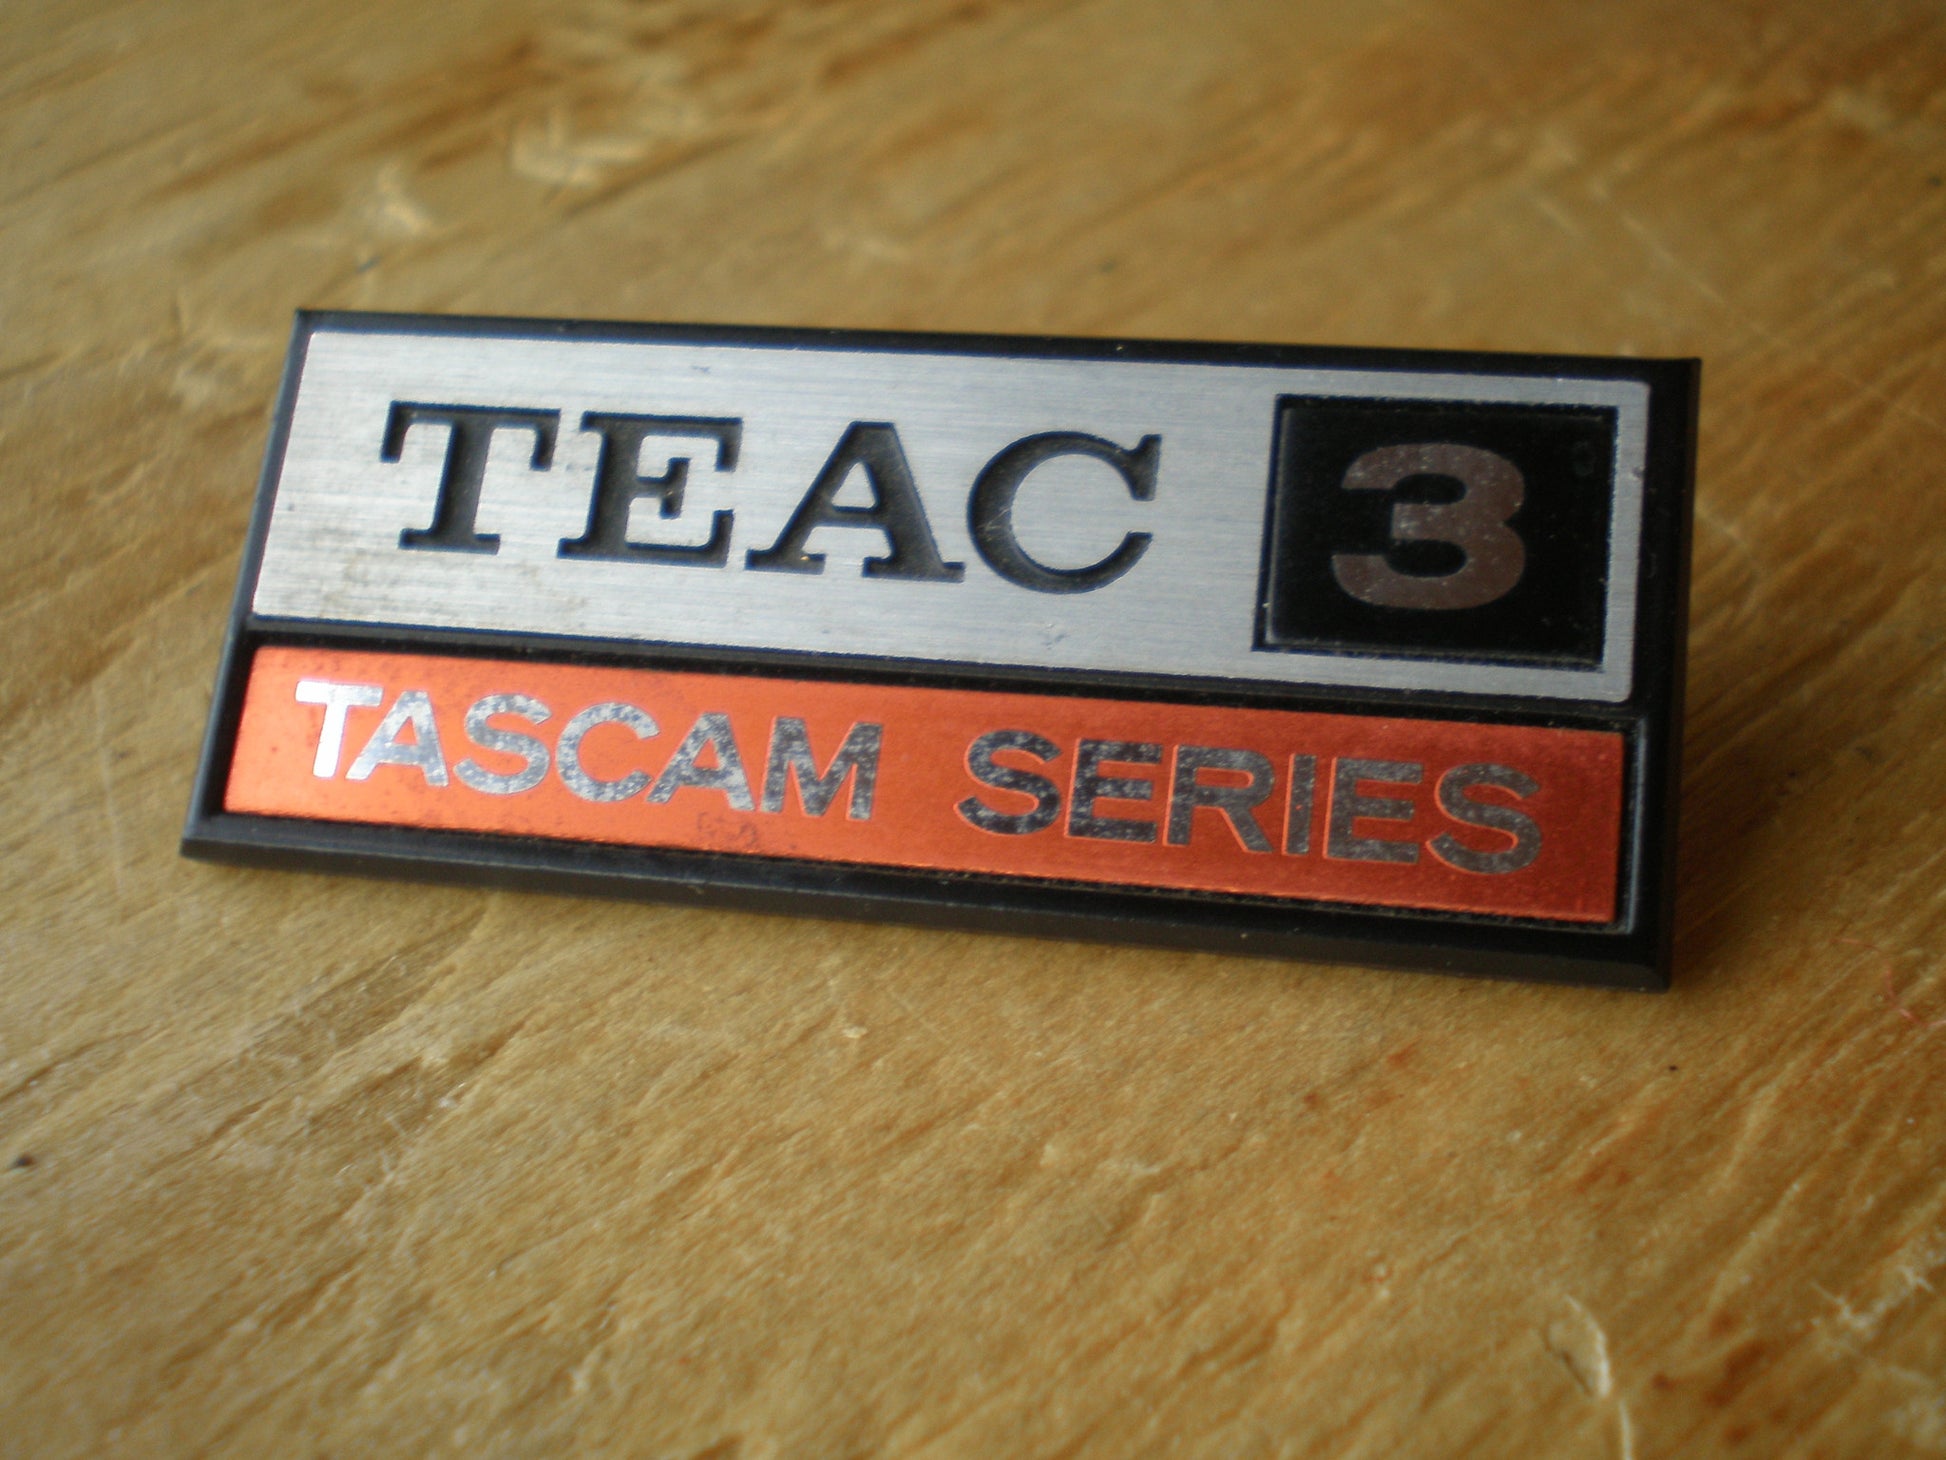 Teac Tascam 3 mixer badge – Tascam Ninja